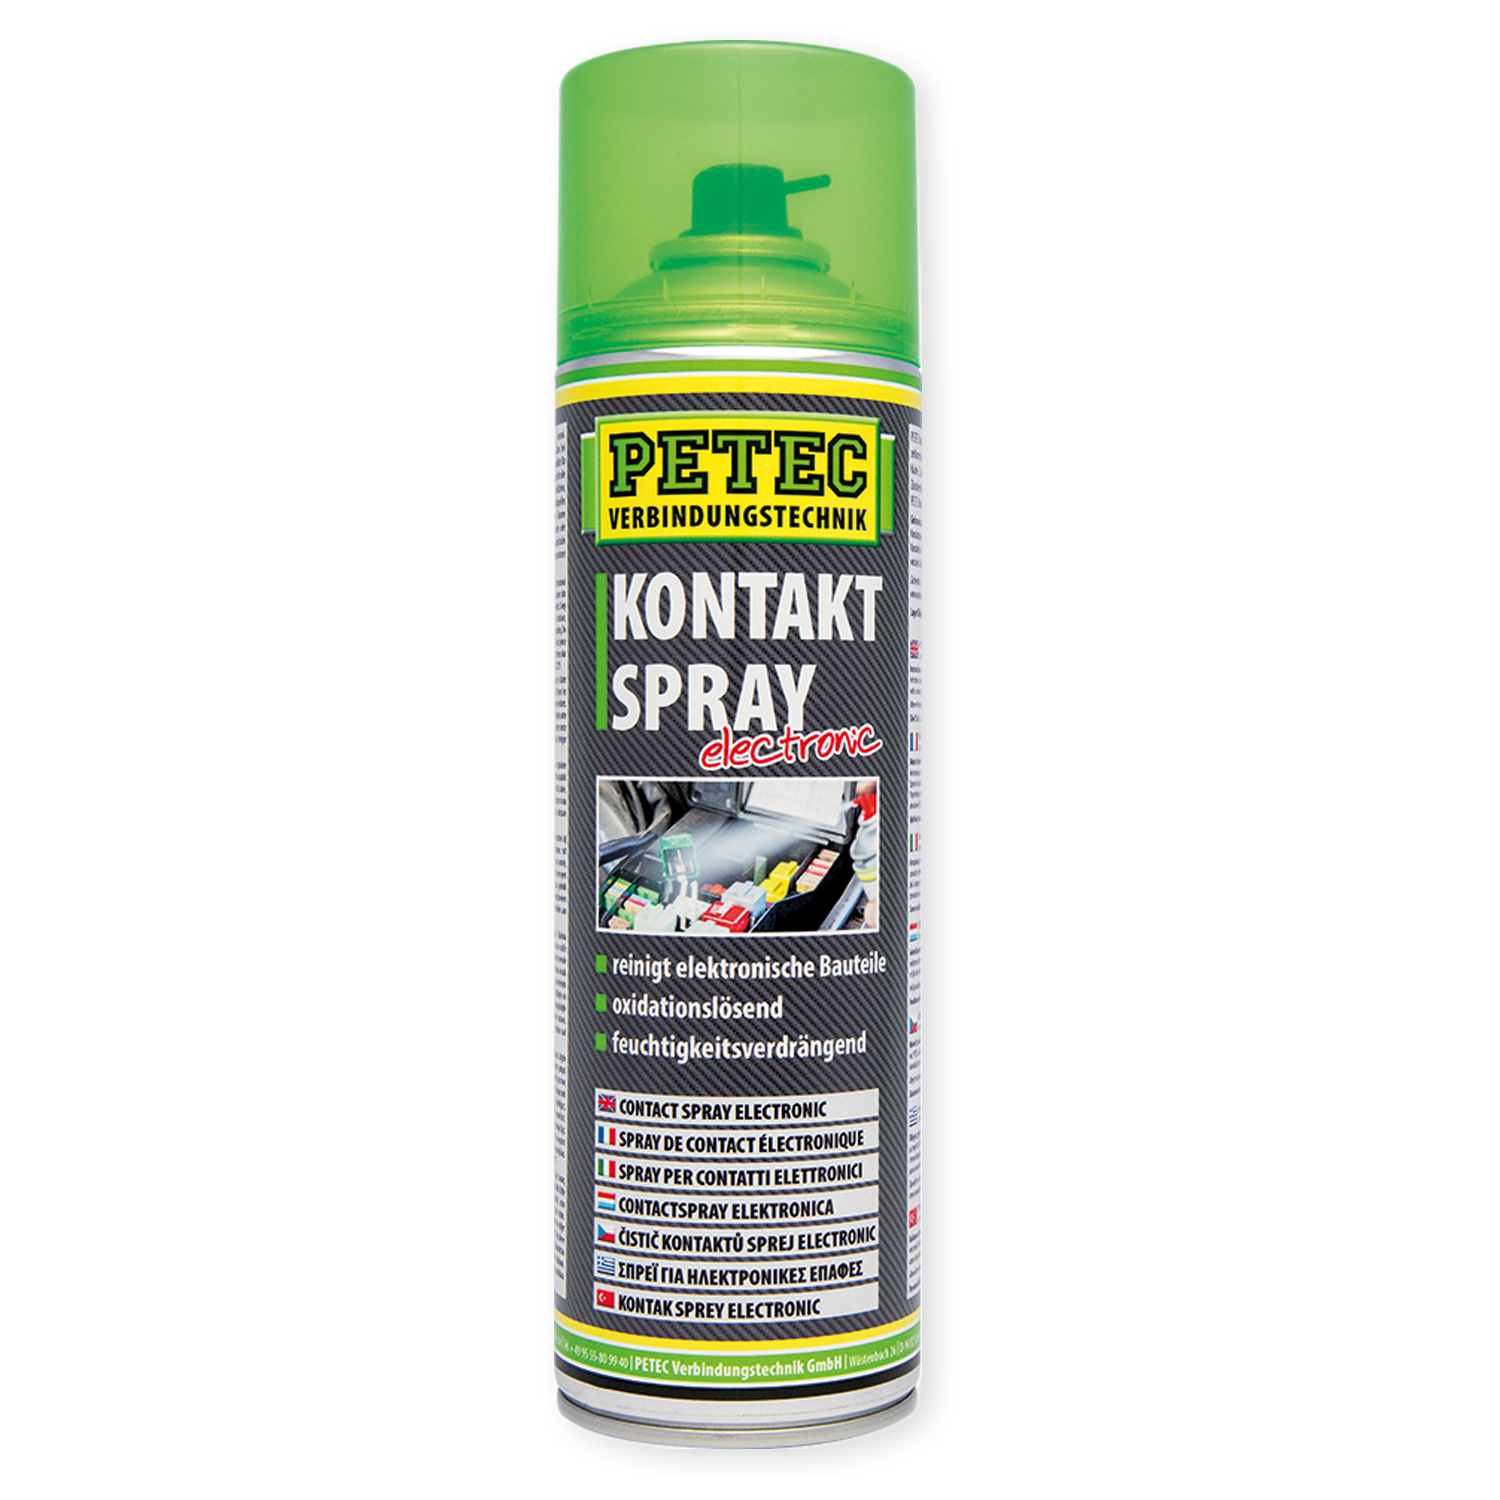 petec-kontaktspray-electronic-elektronik-spray-dose-500-ml-71150-ebay